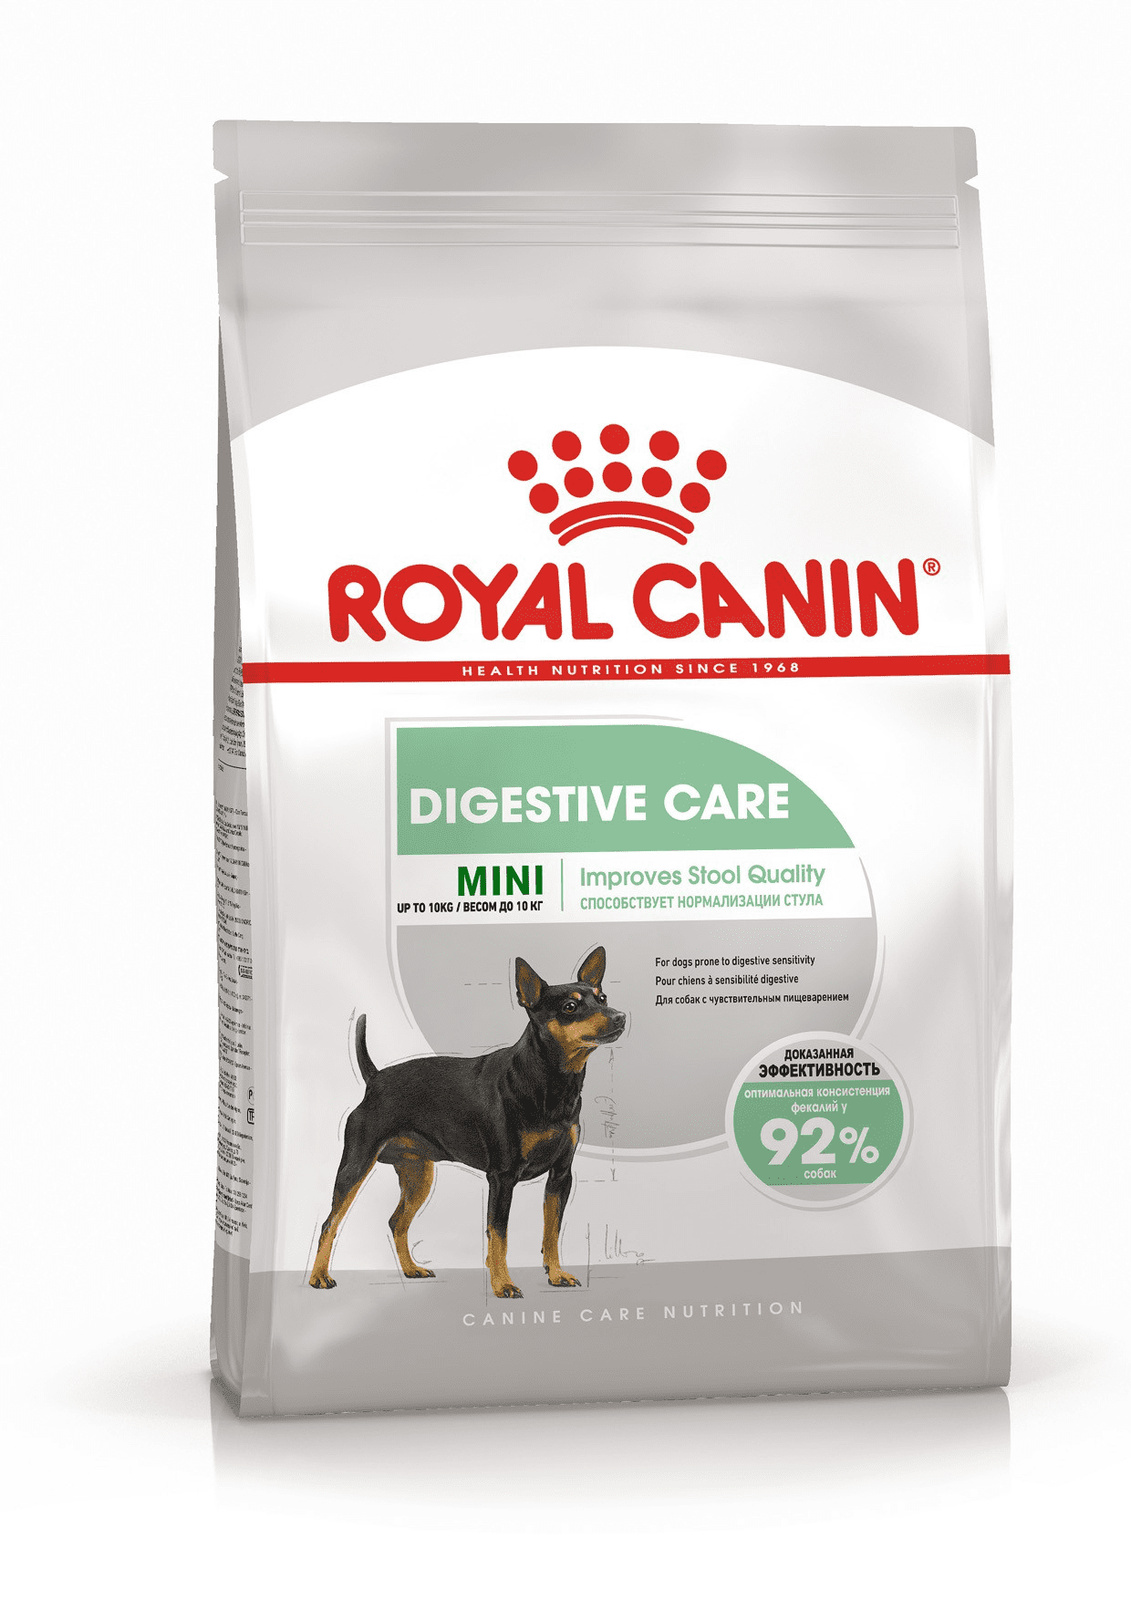 Royal Canin Корм Royal Canin для собак малых пород - забота о пищеварении (3 кг) royal canin корм royal canin для собак малых пород забота о пищеварении 3 кг